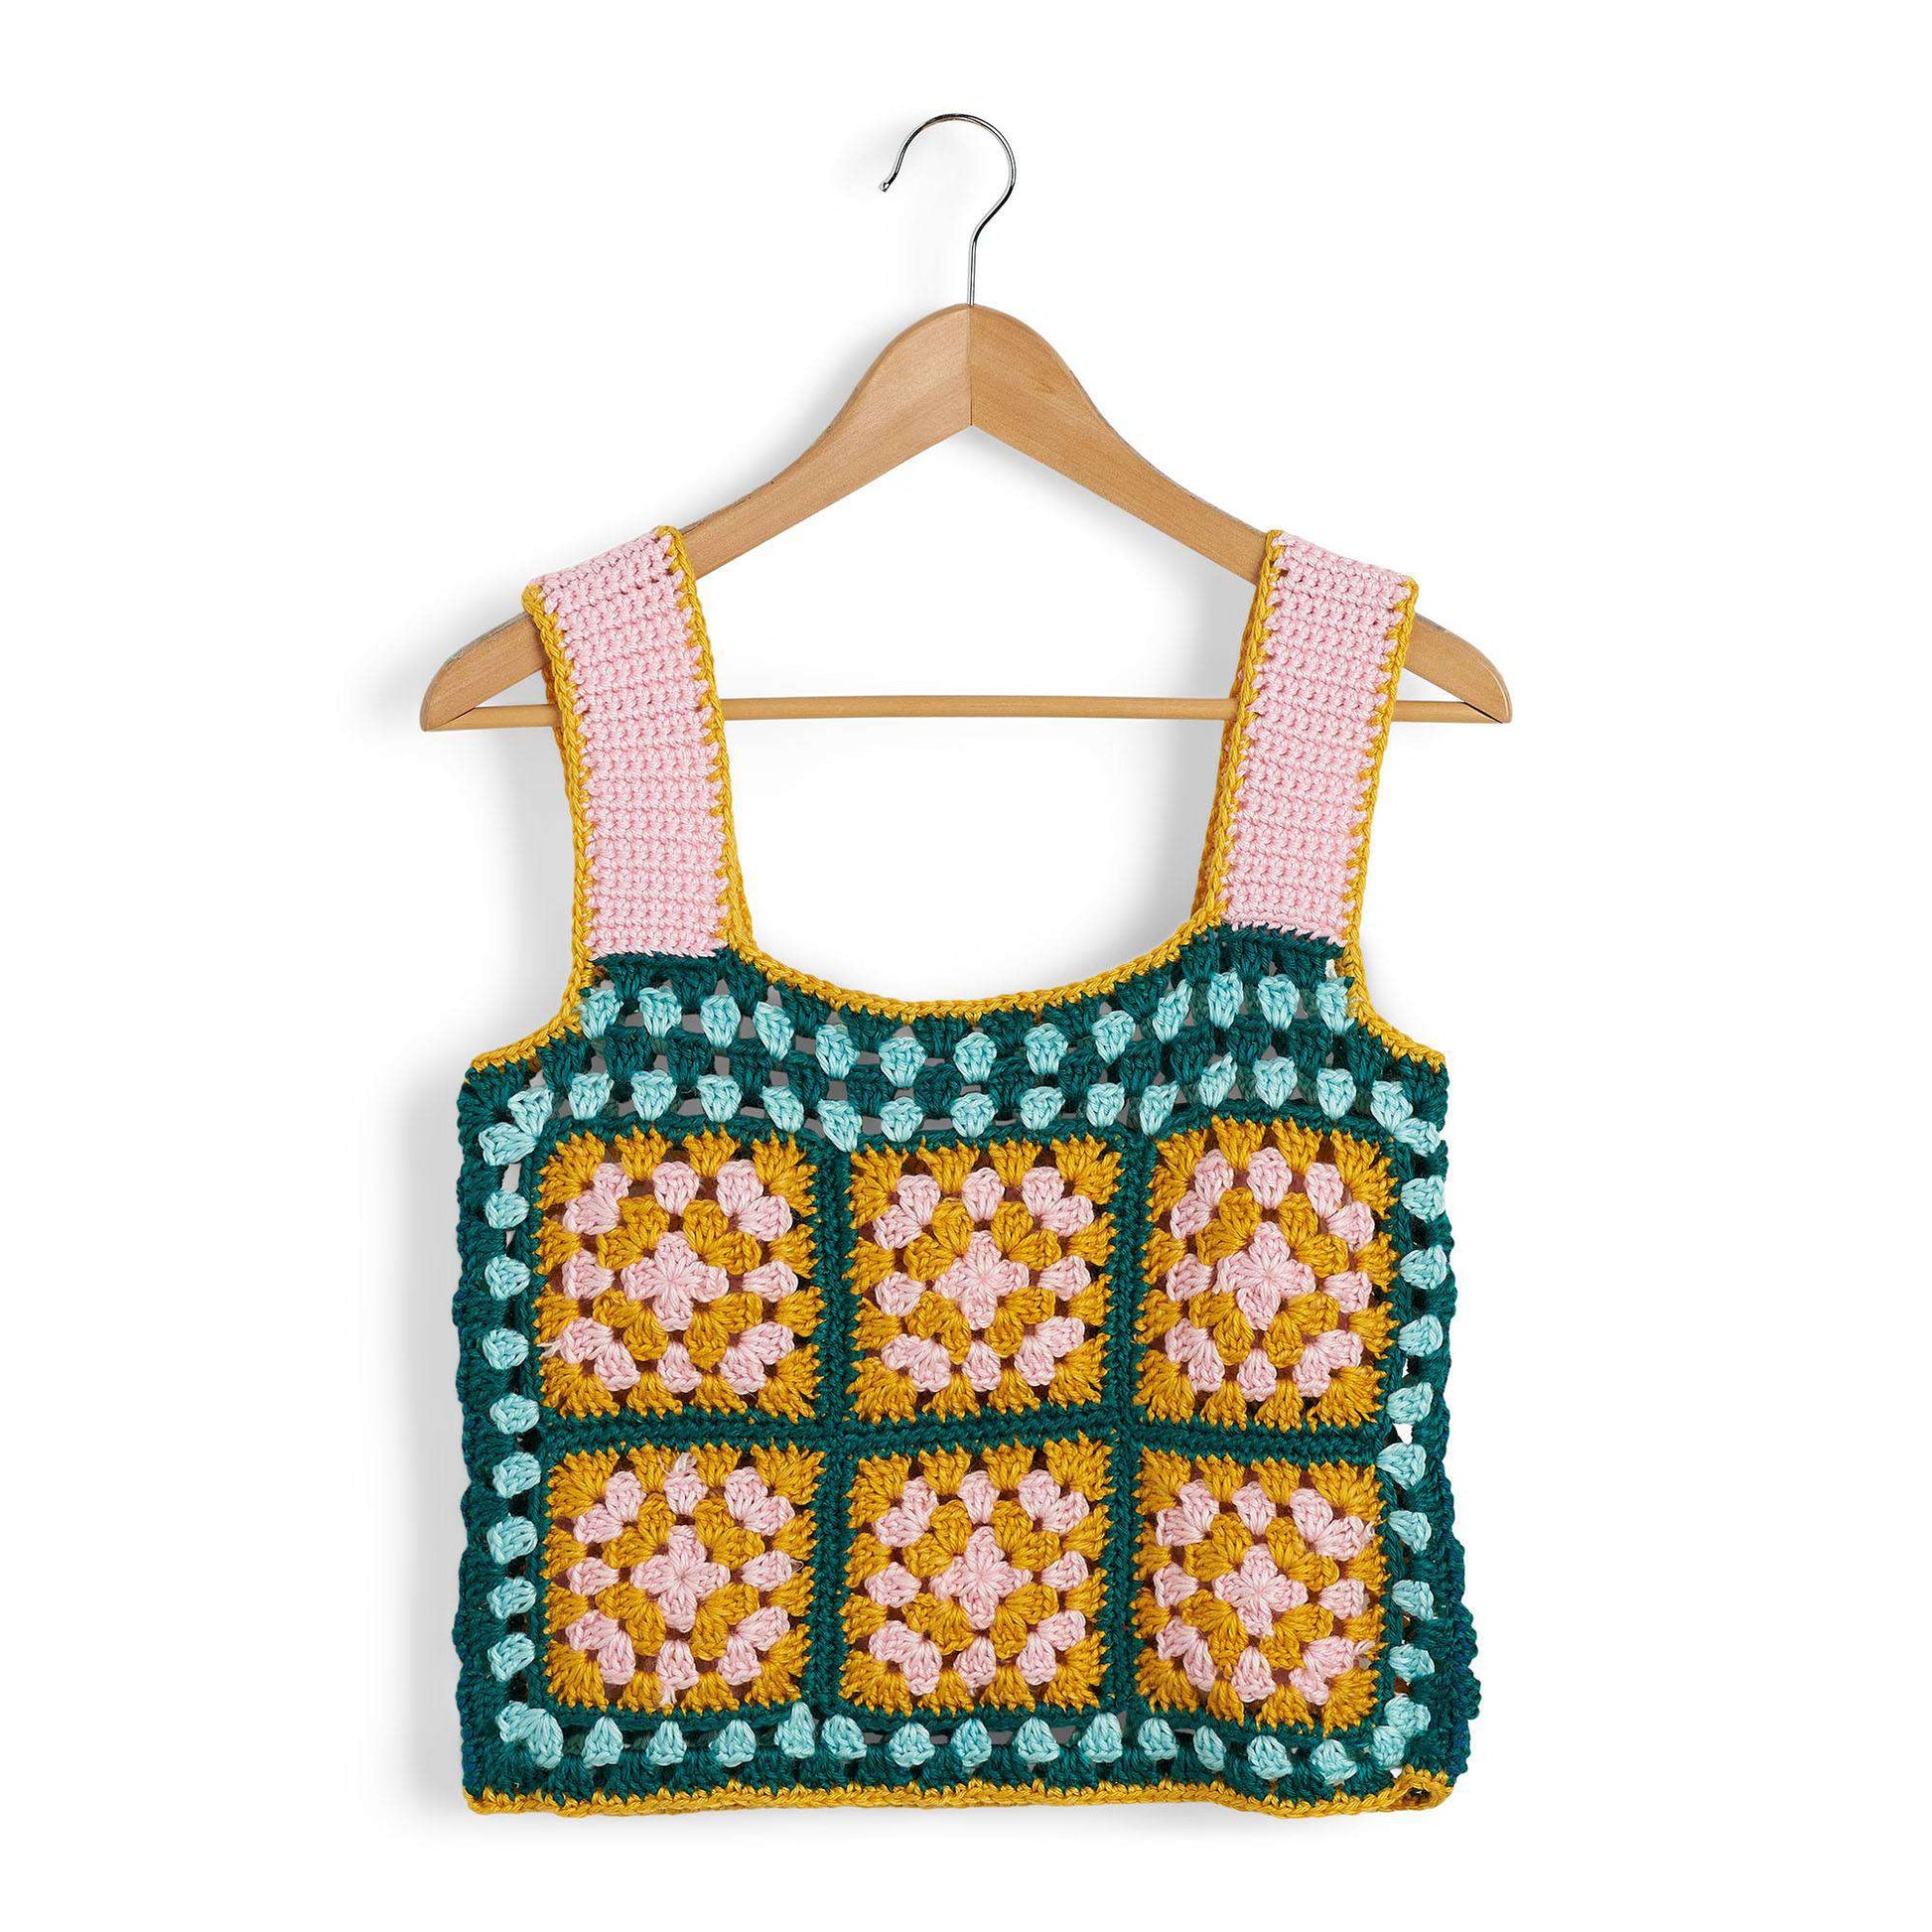 Caron Crochet Granny Square Top | Yarnspirations